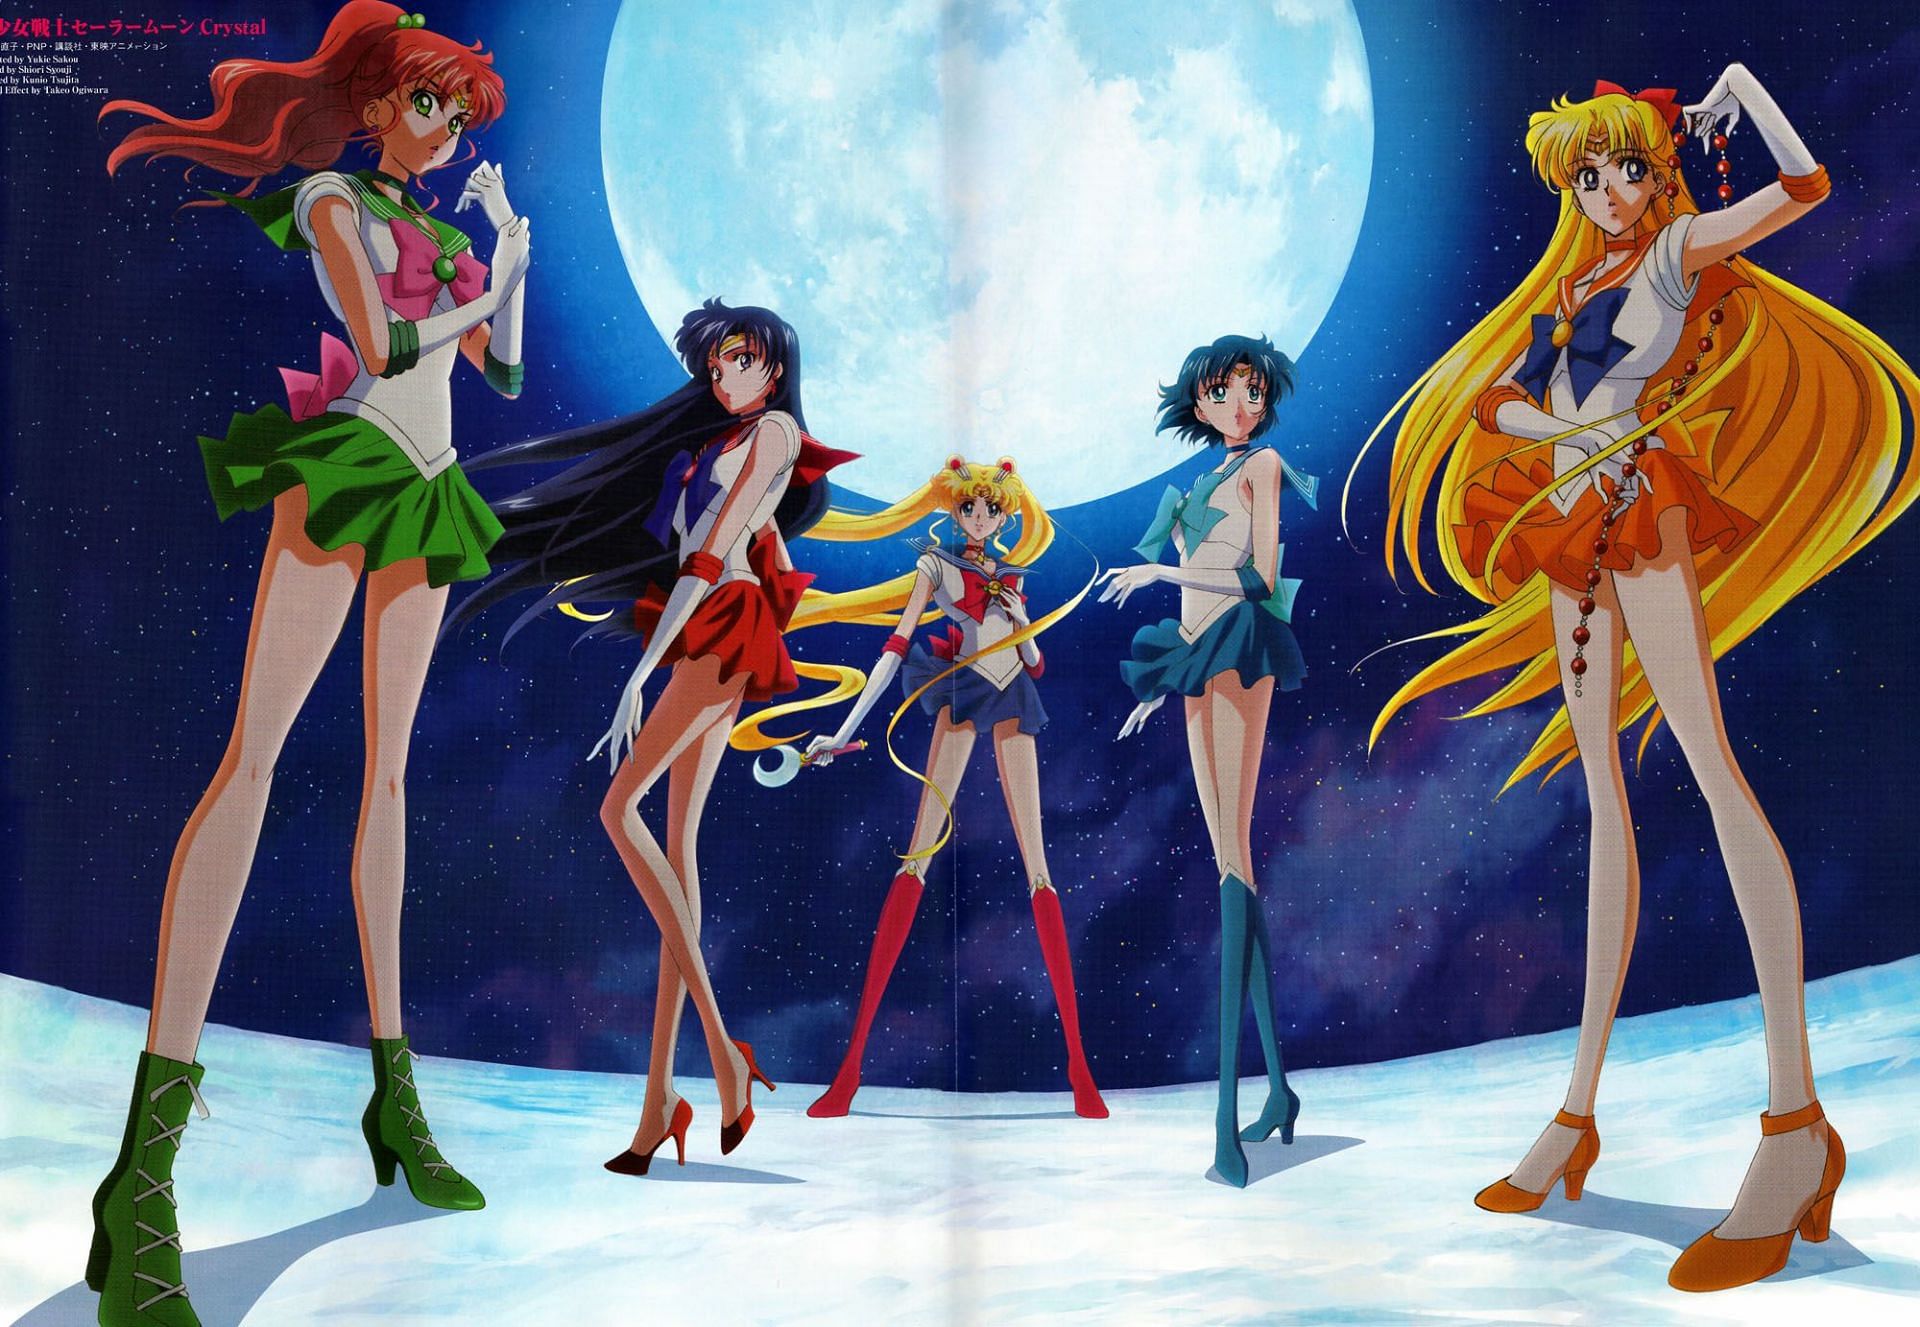 Five of the Sailor Senshi (Image via Toei Animation) Sailor Saturn (Image via Toei Animation)